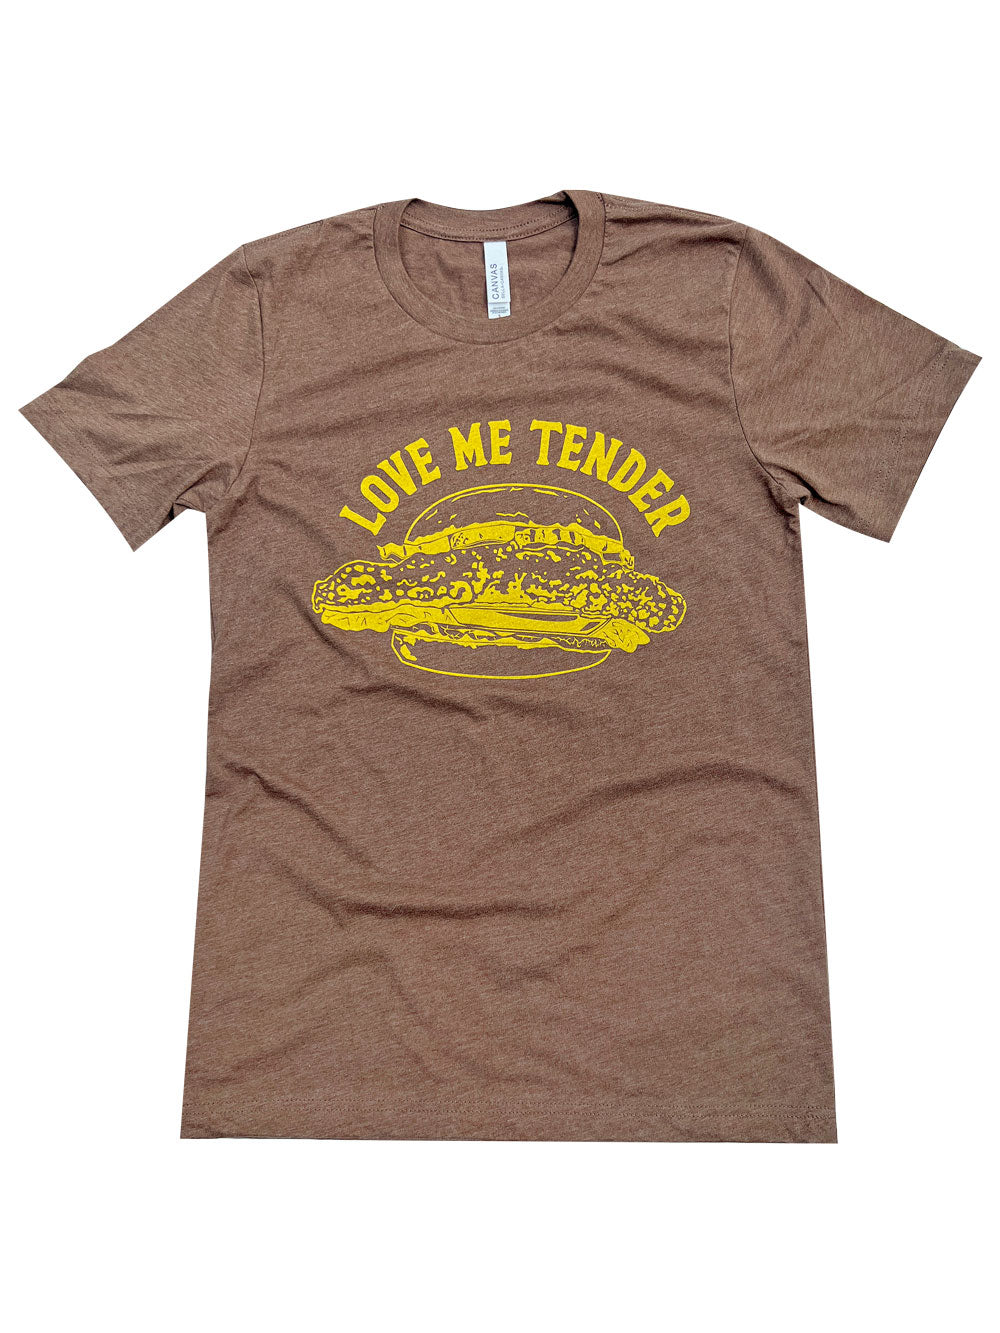 Love Me Tender (pork tenderloin sandwich) brown heather t-shirt